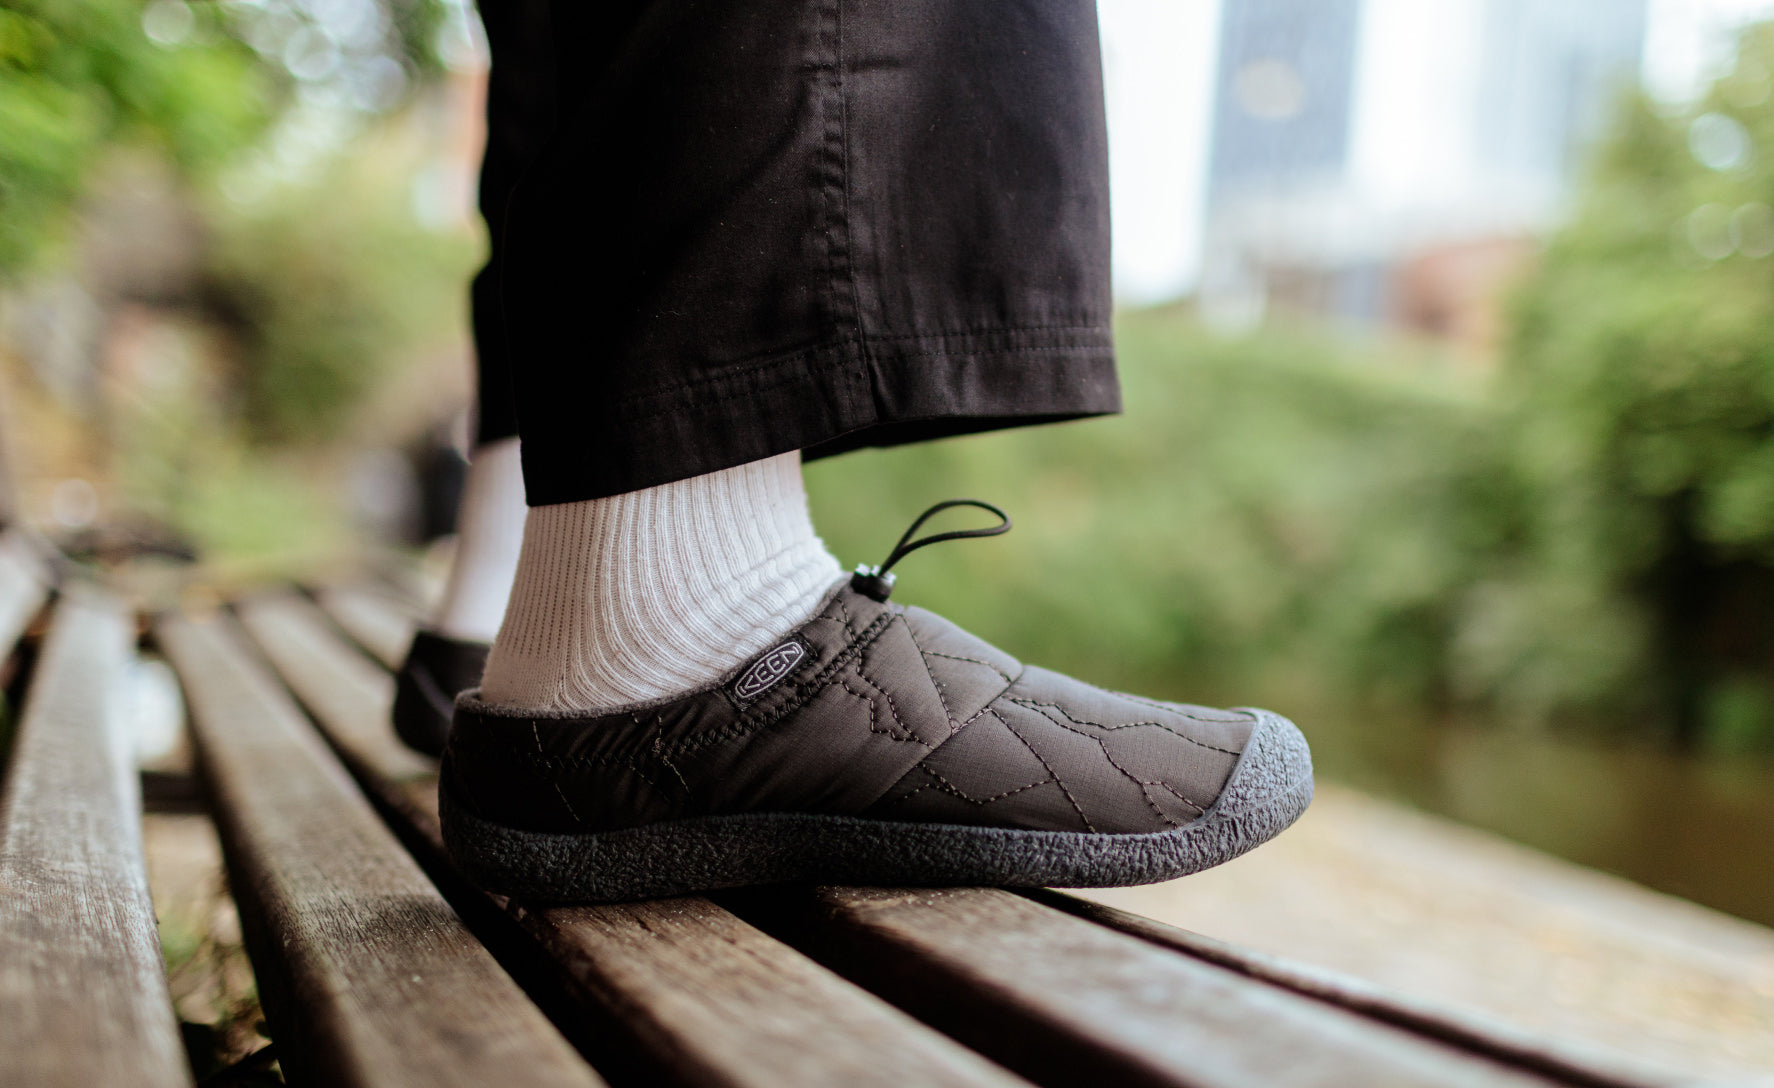 Men's Quilt Slide Sandals